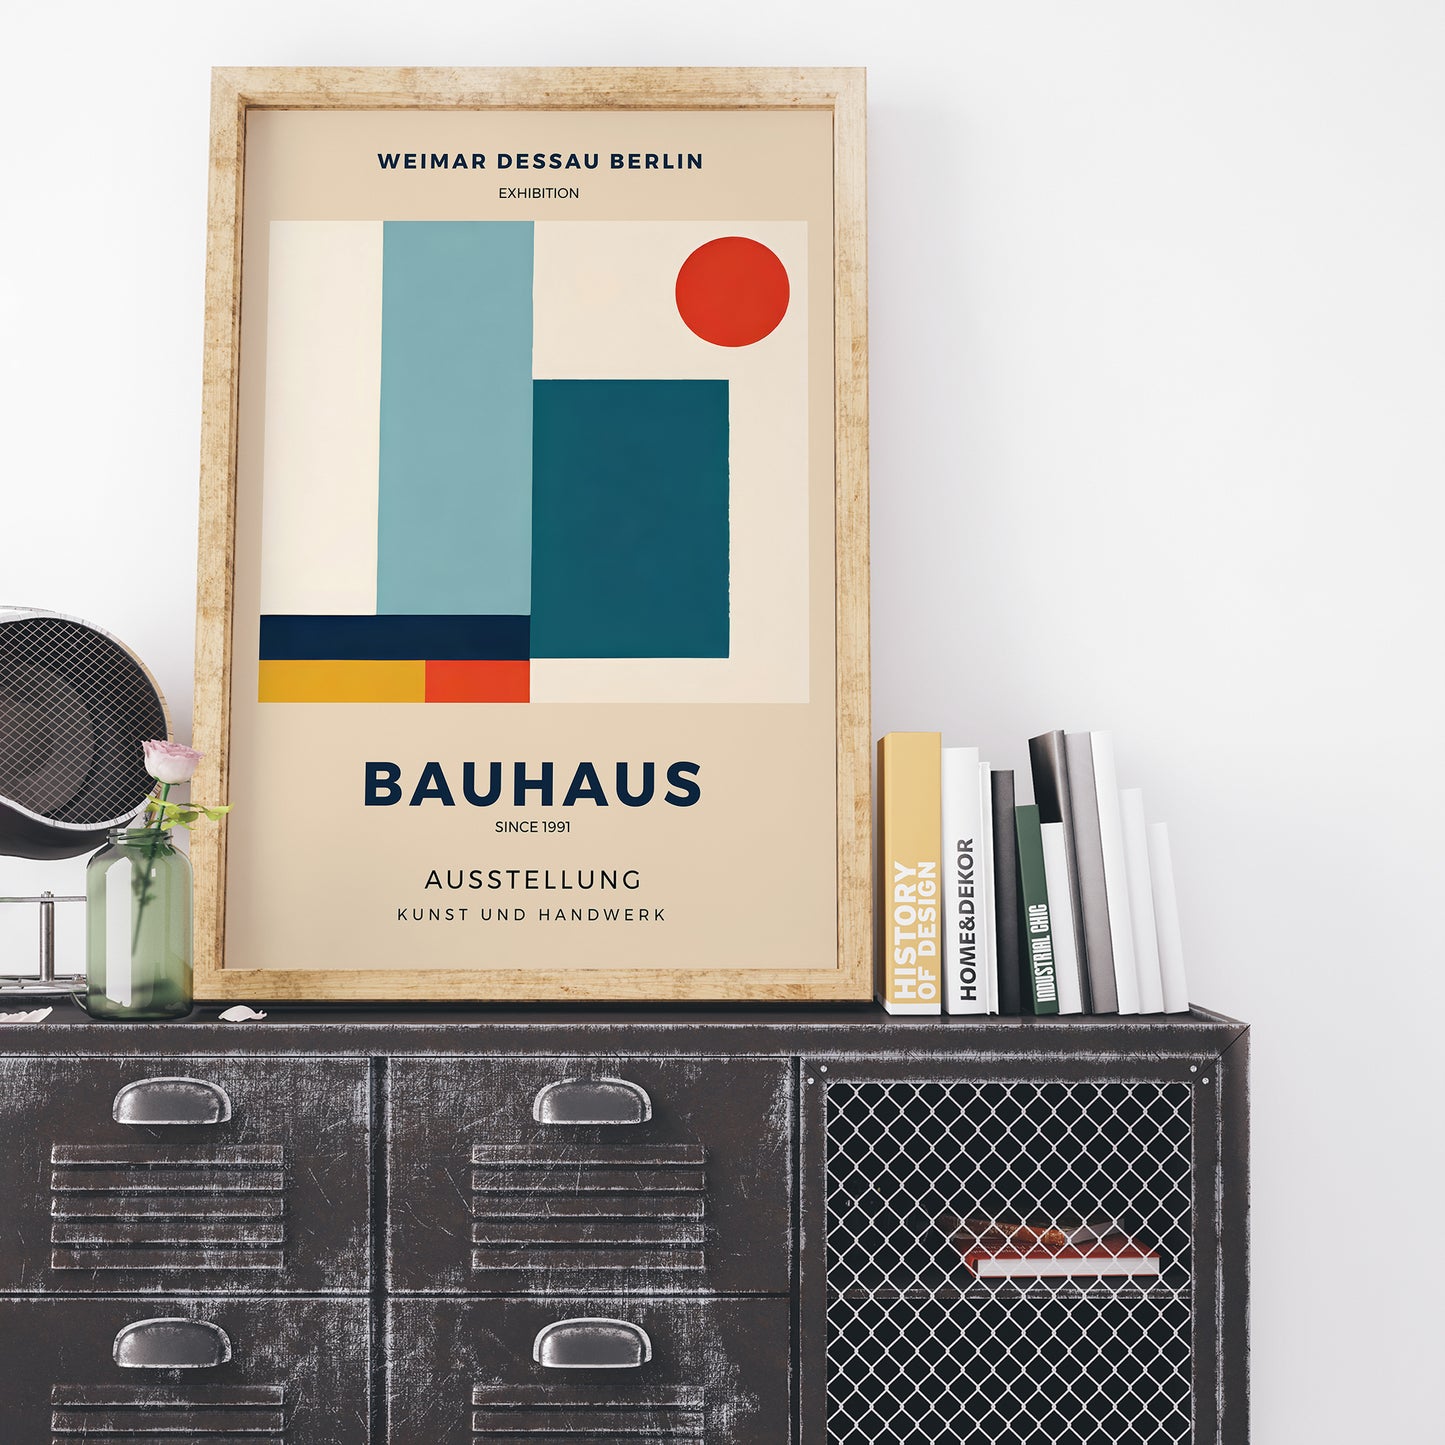 Minimalist Modern Bauhaus Poster